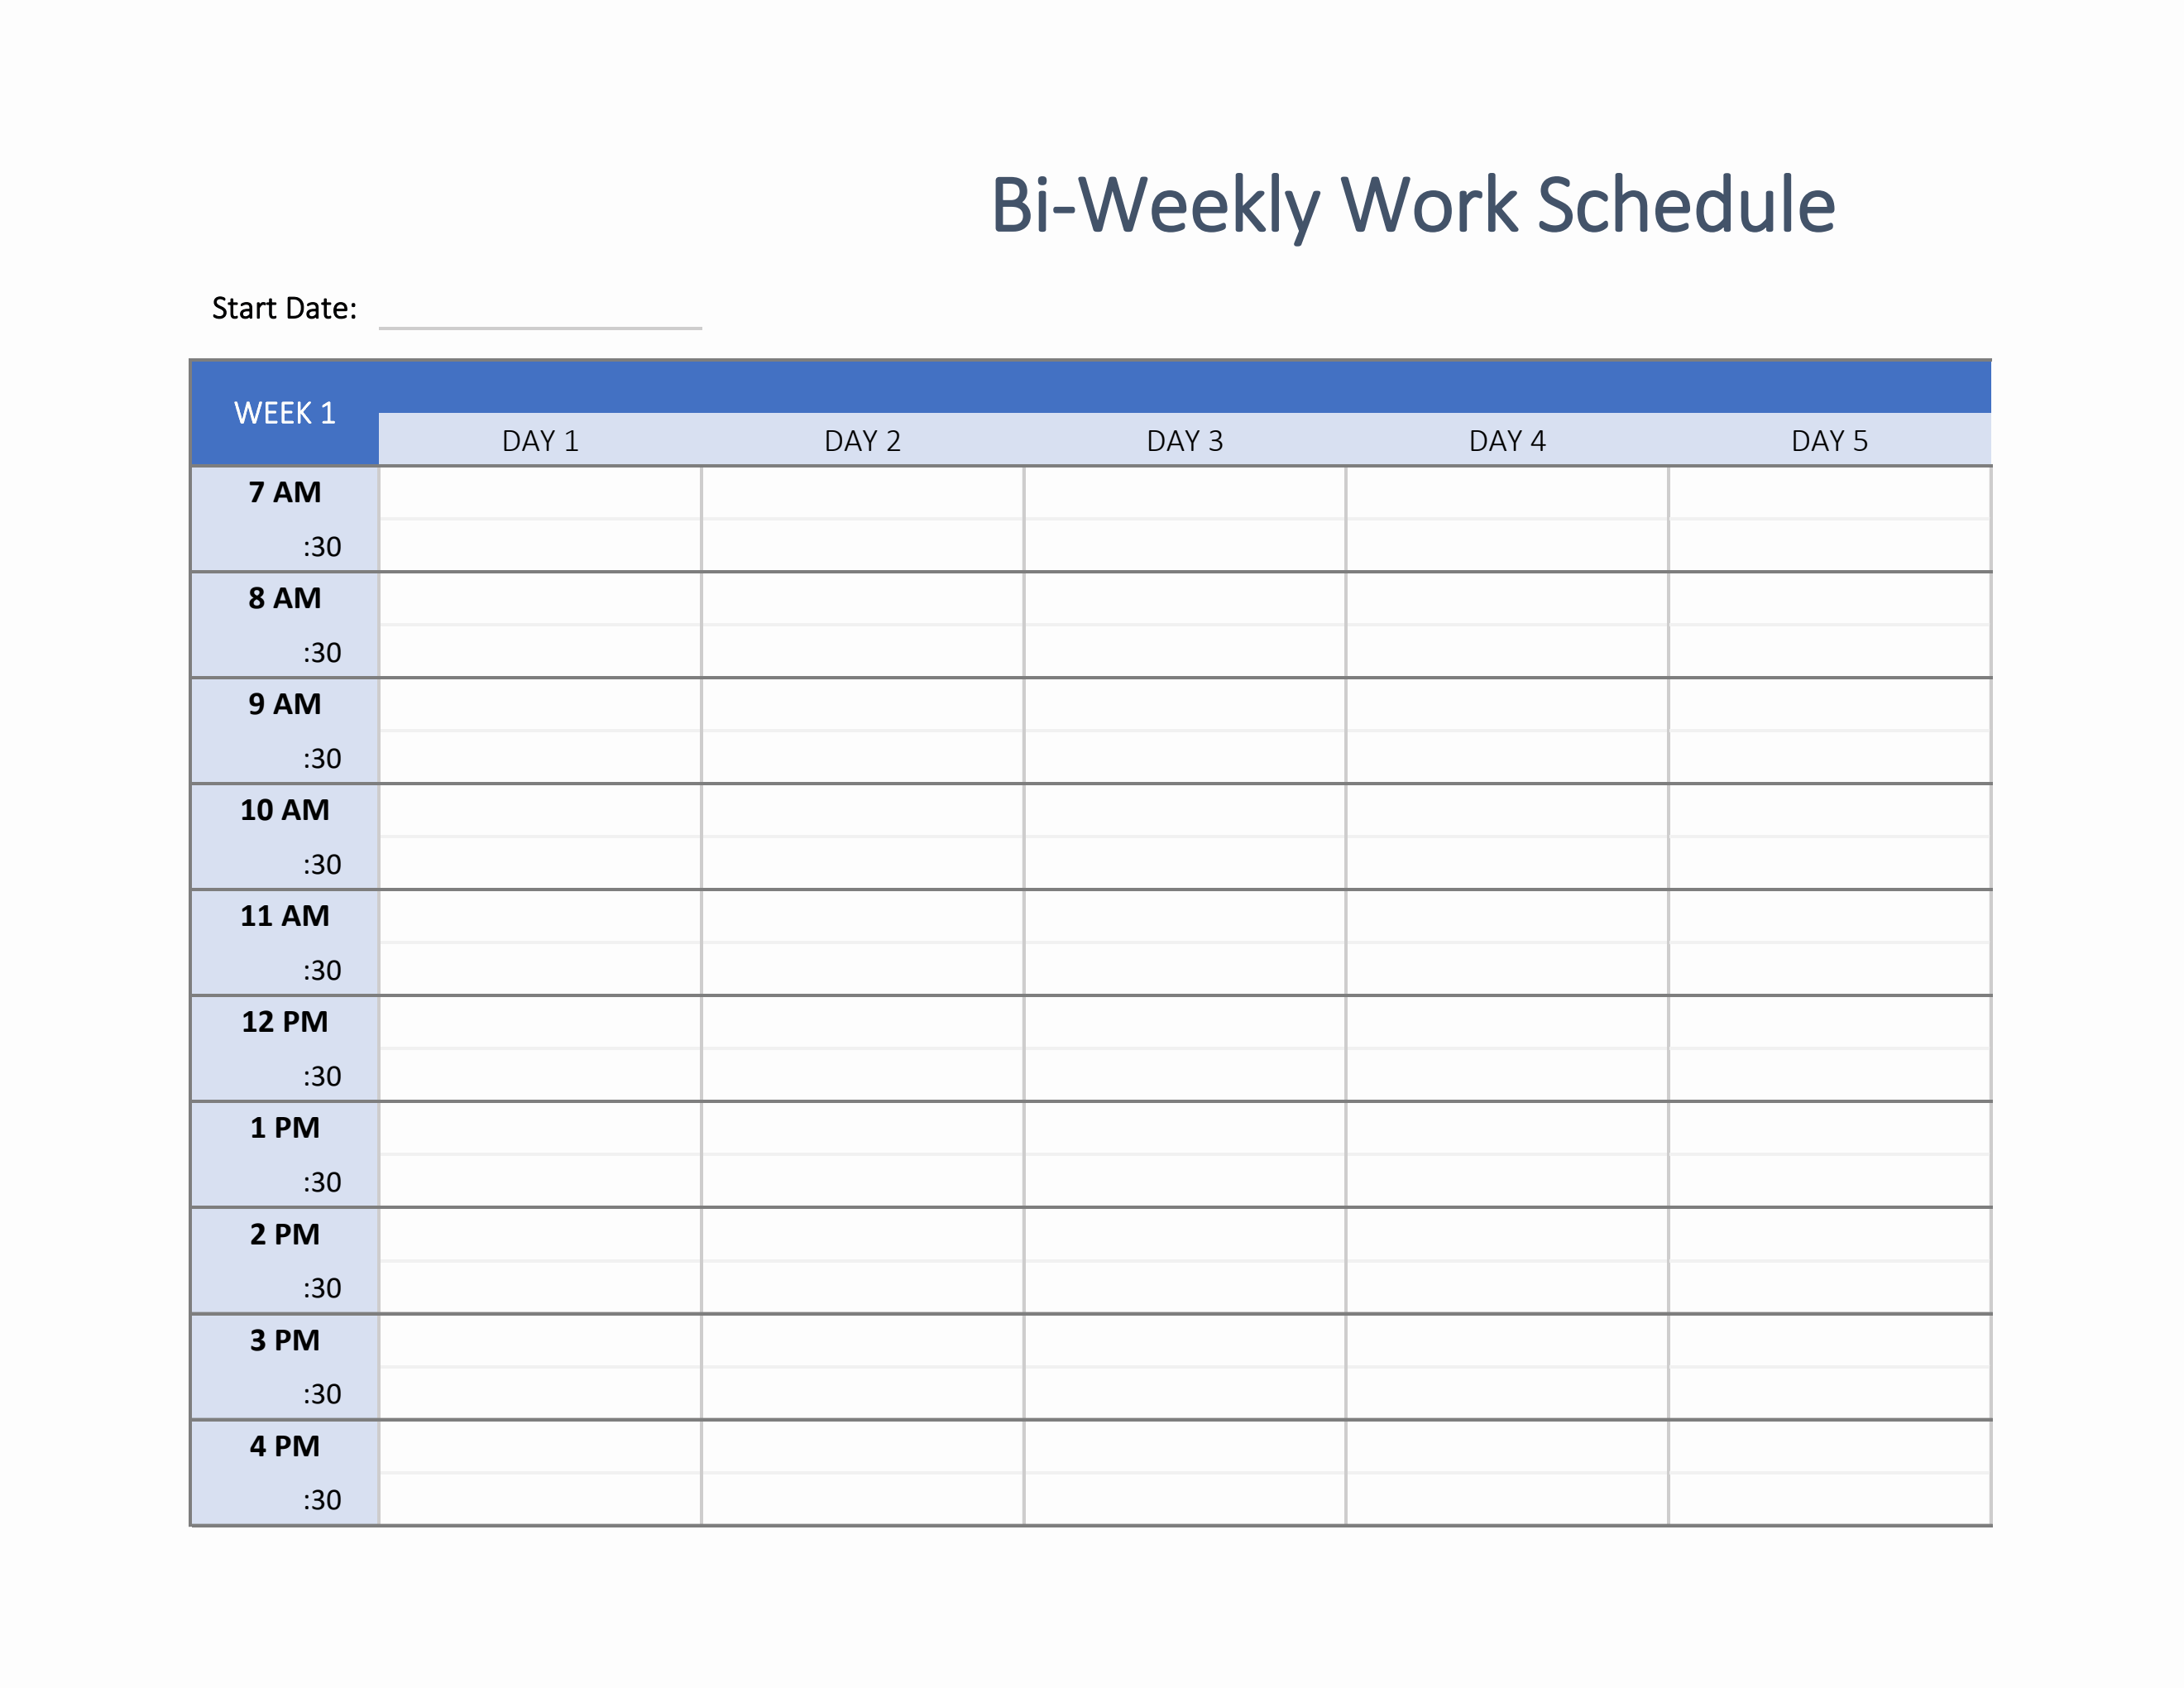 excel employee monthly schedule template